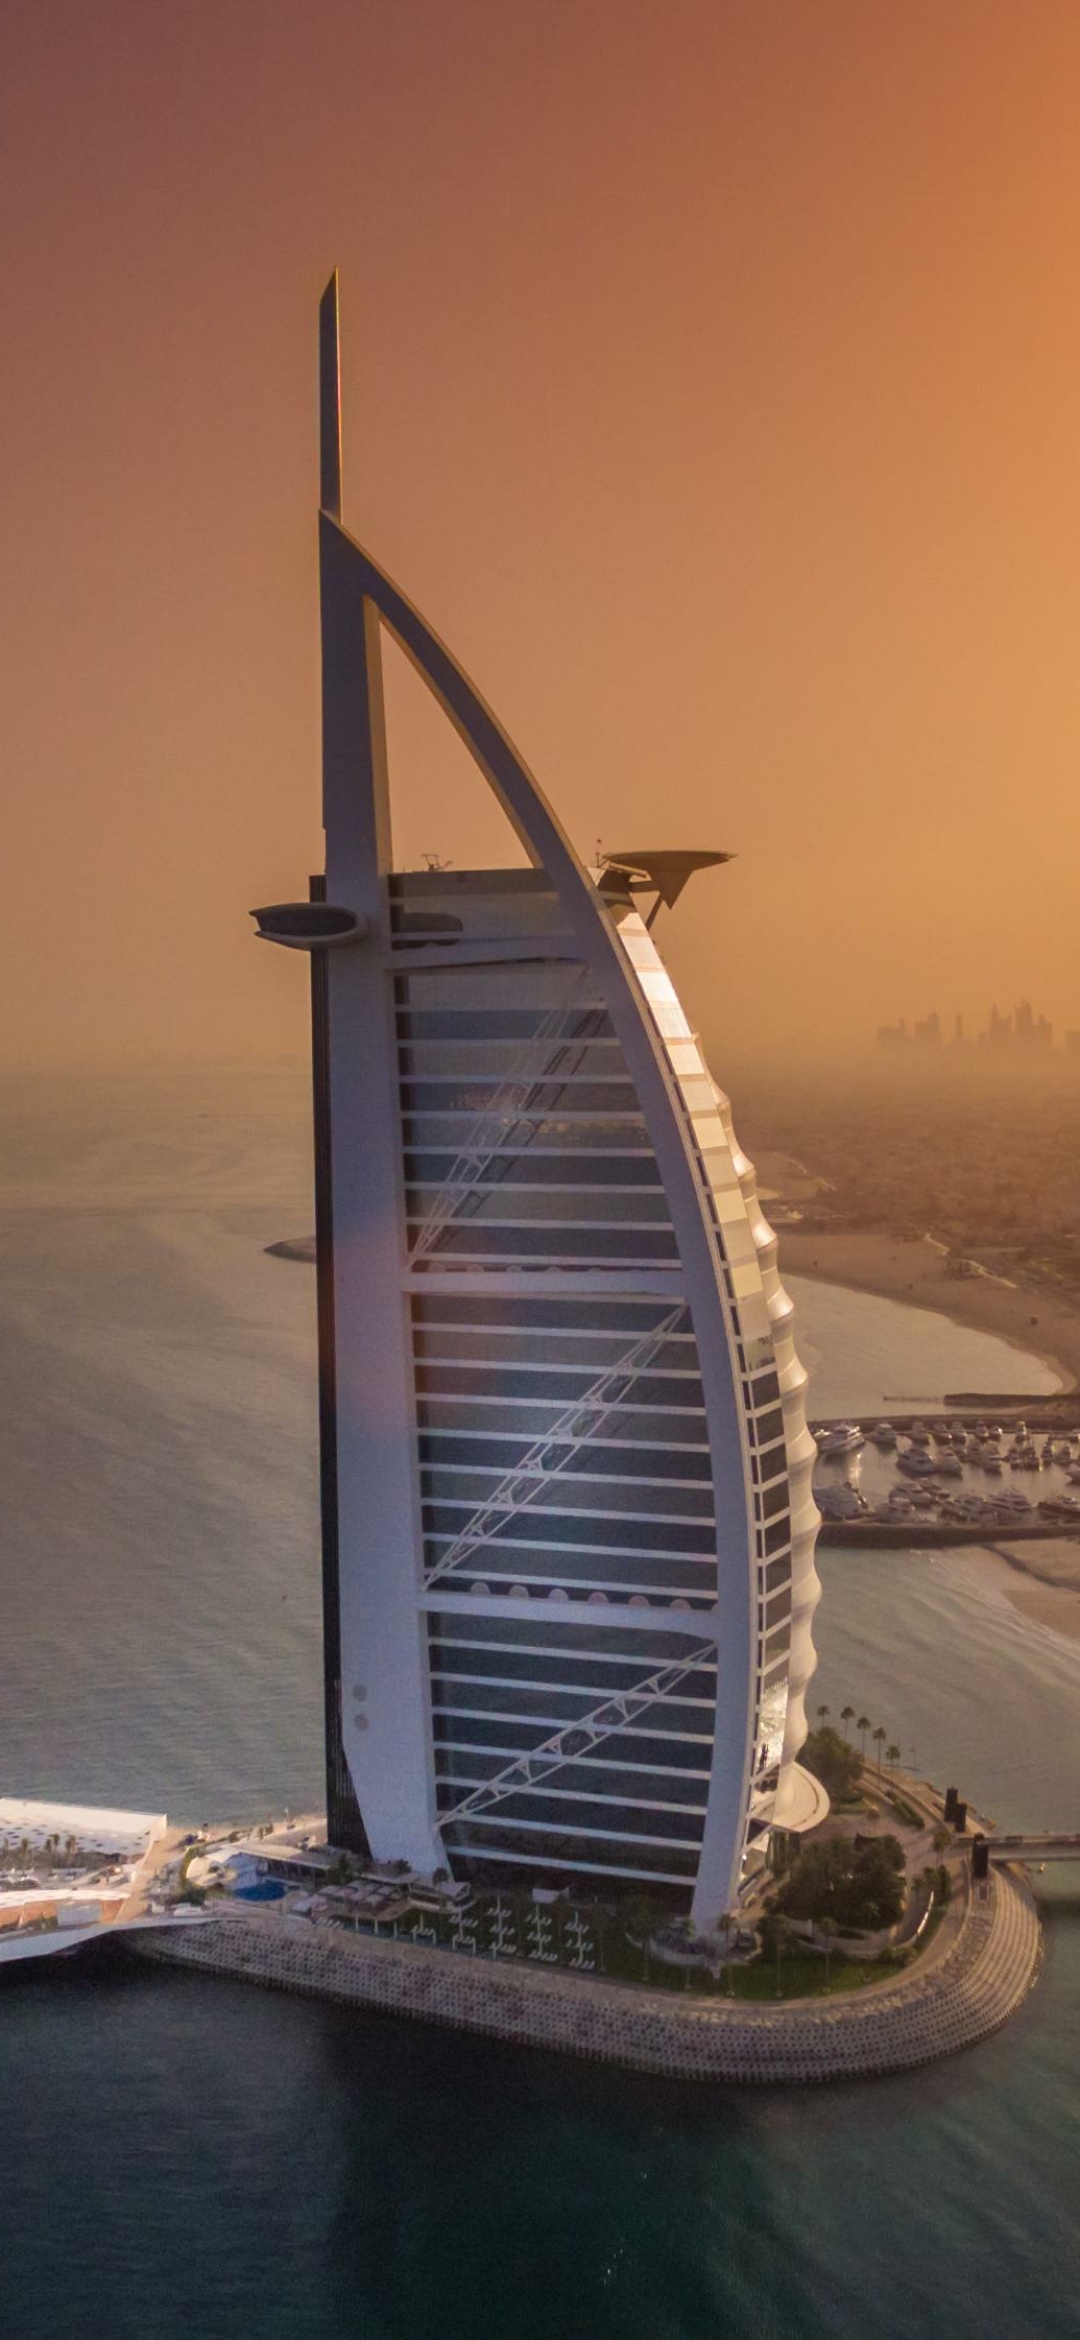 Burj Al Arab Dubai, United Arab Emirates at Sunset